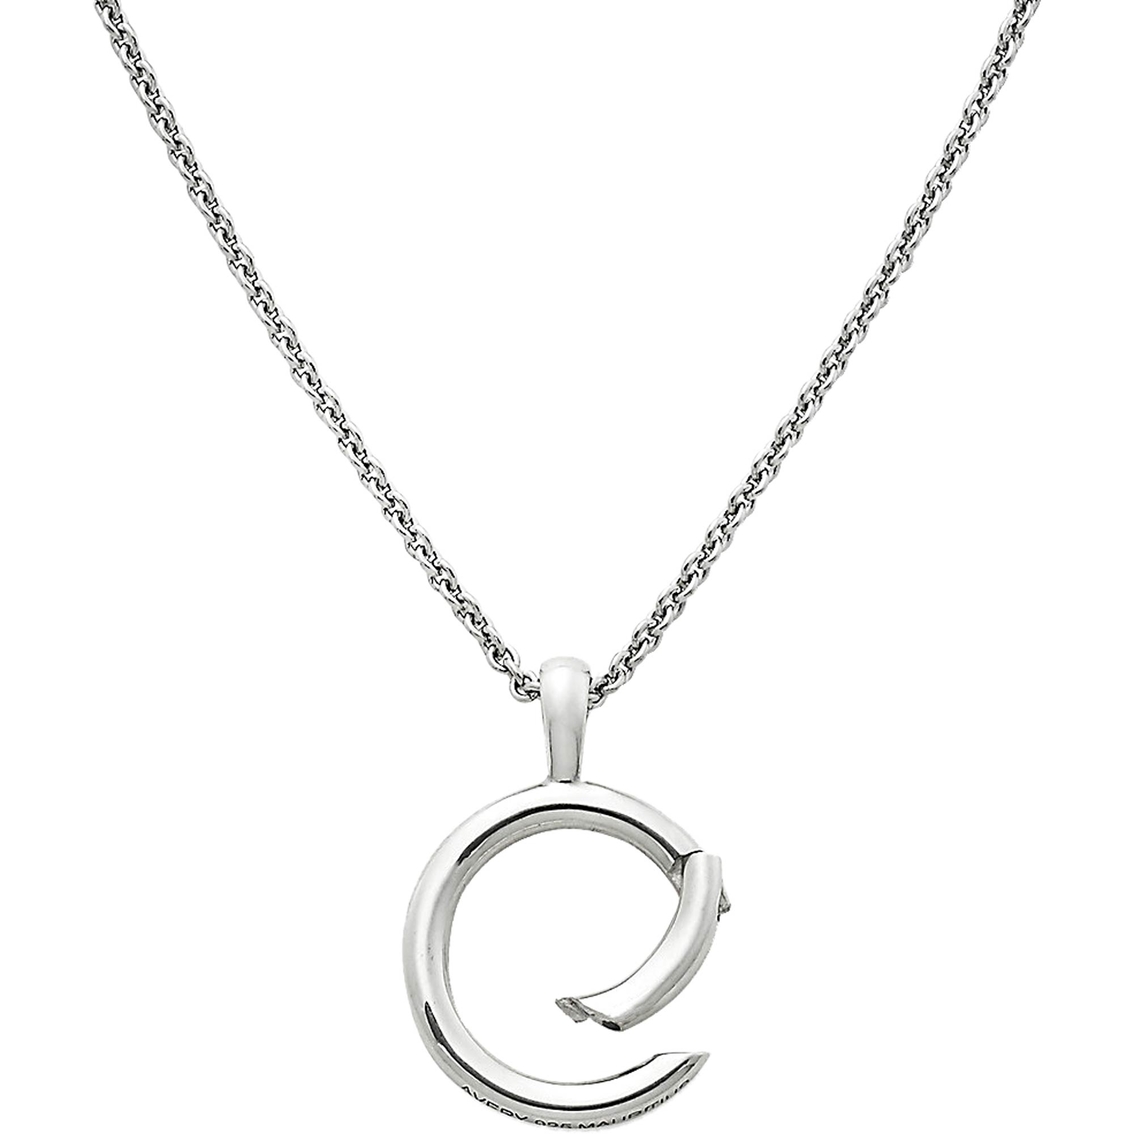 James Avery Circlet Charm Holder Necklace - Image 3 of 3